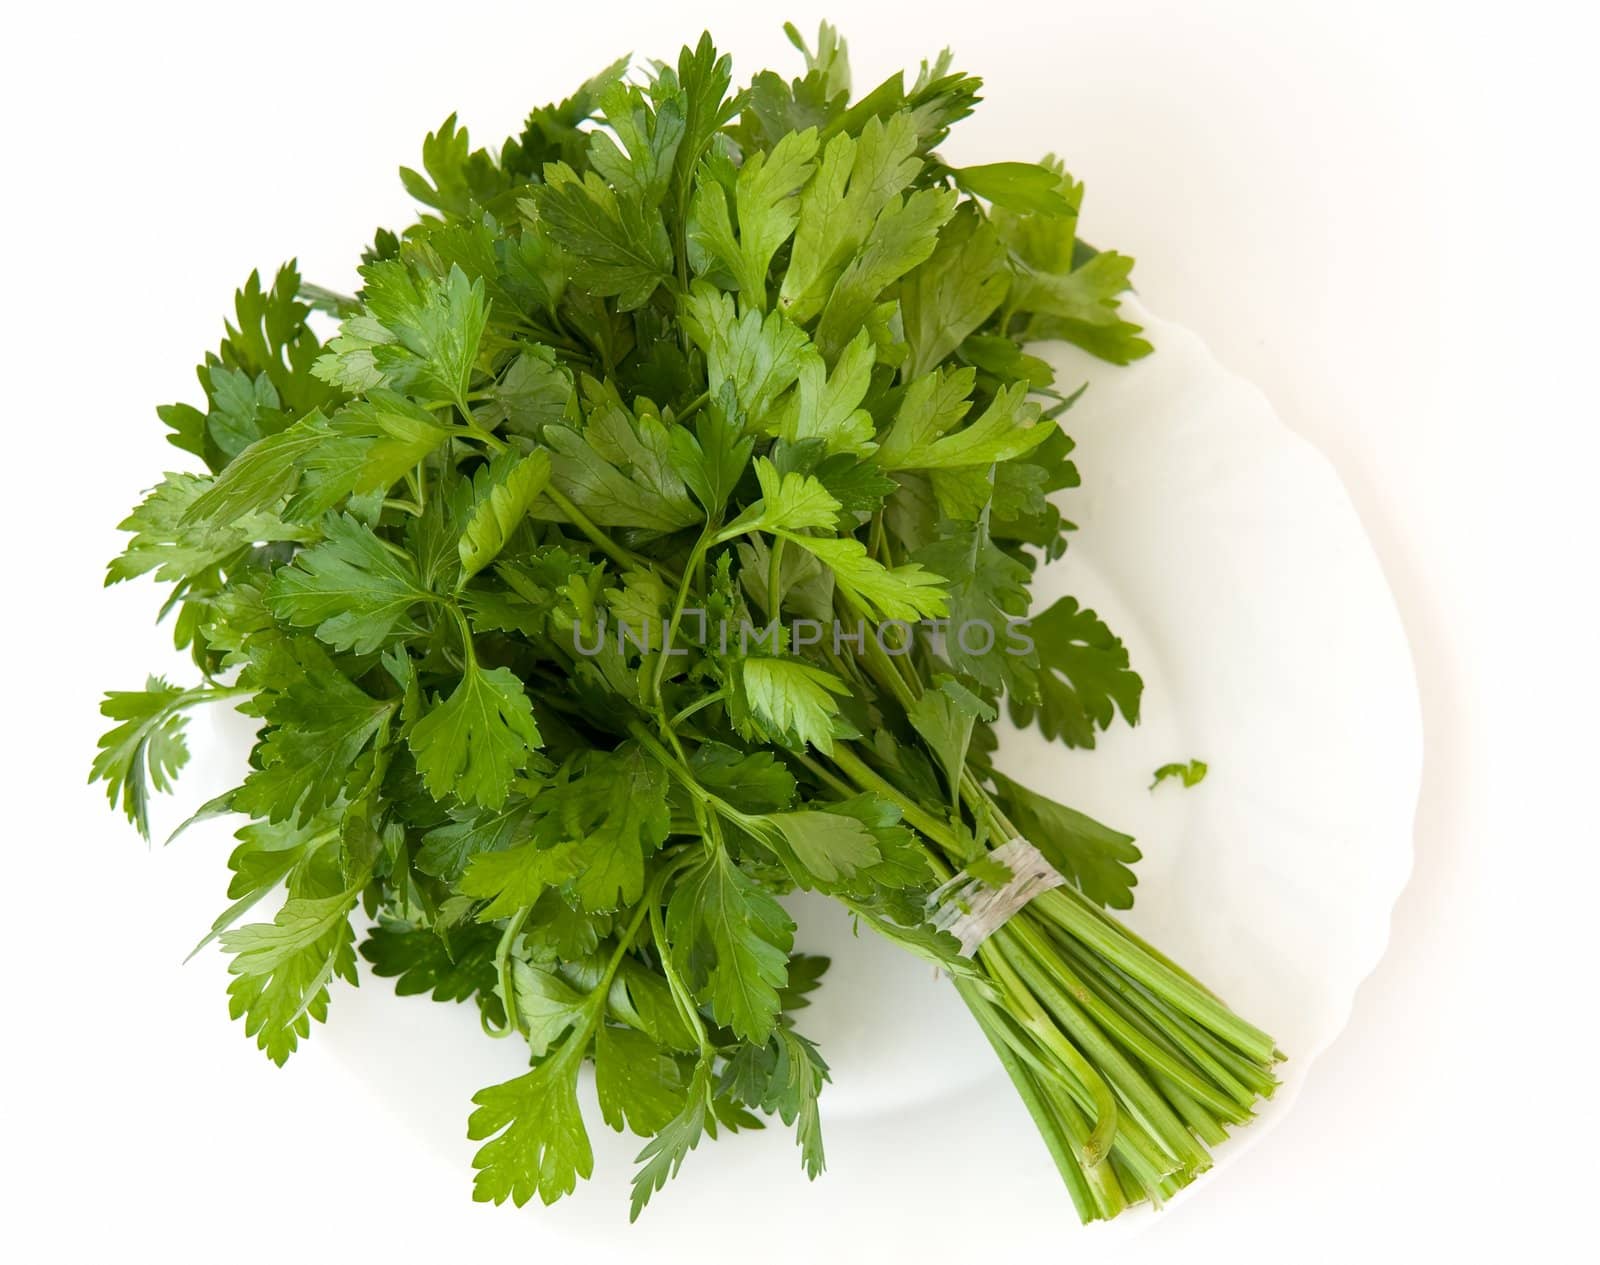 Fresh green parsley a white plate by stepanov